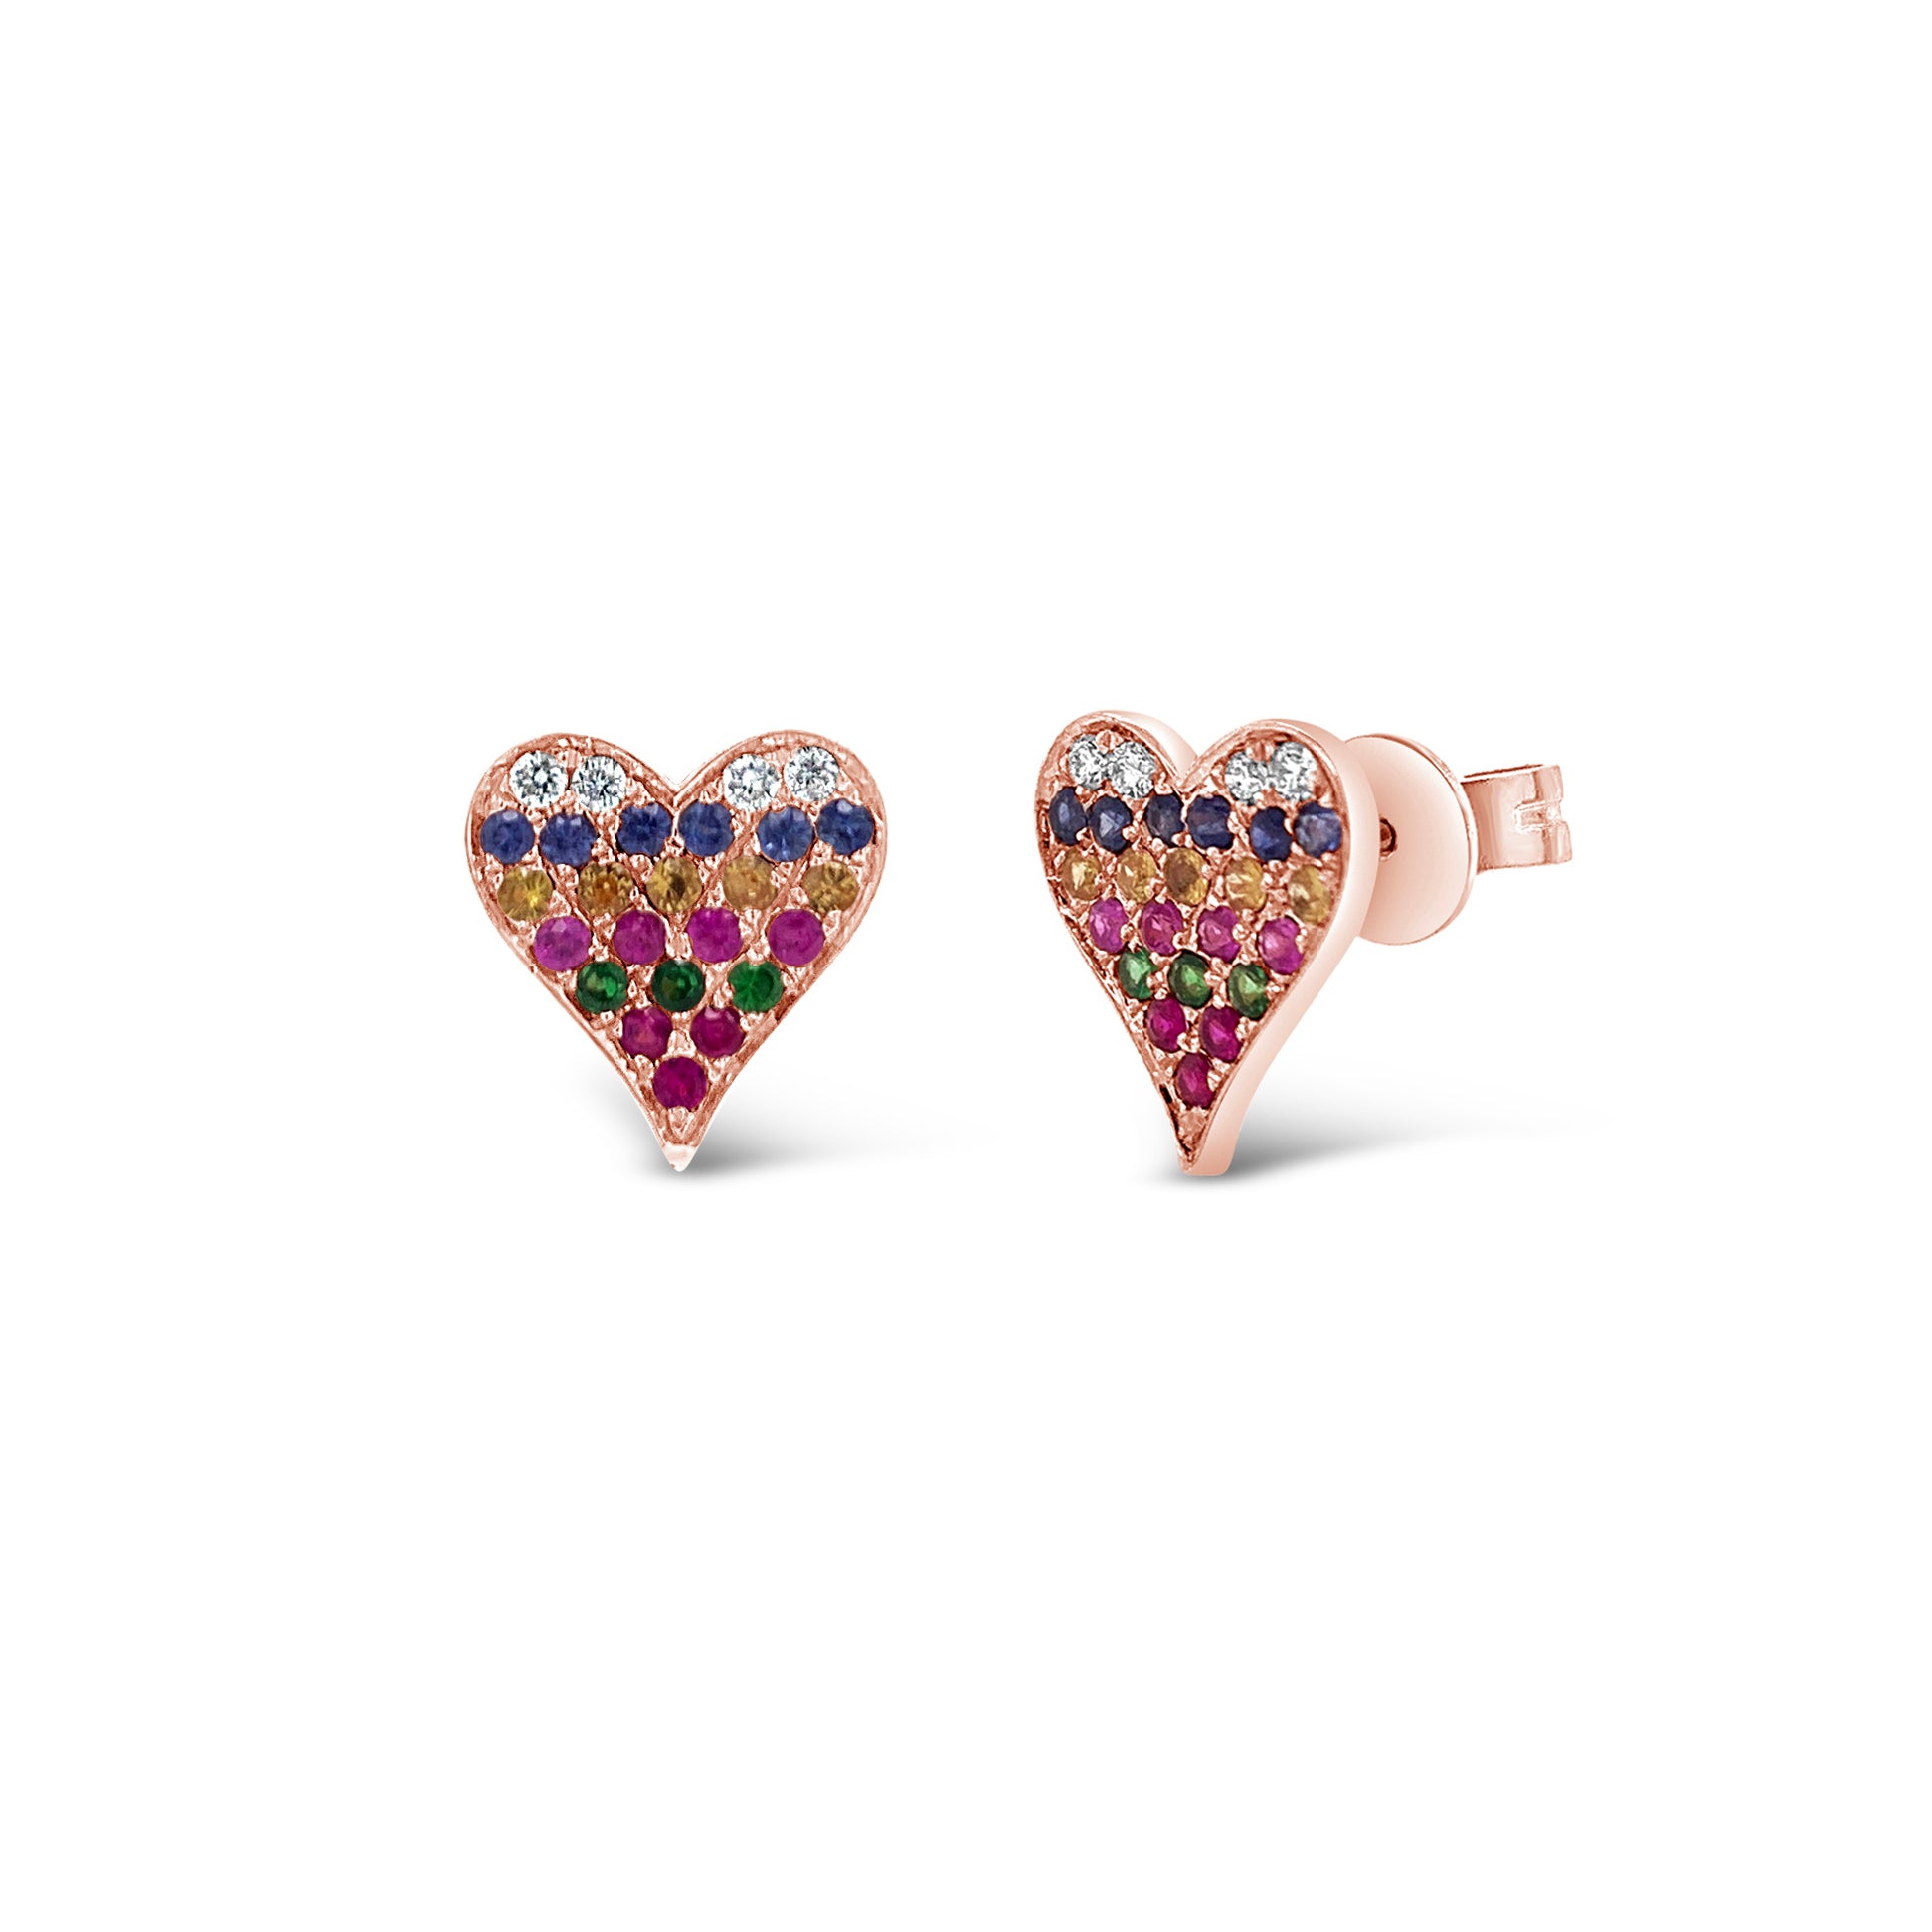 Rainbow Heart Stud Earrings - 14k rose gold weighing 1.99 grams - 0.54 total carat weight (multicolor gemstones) - 0.09 total carat weight (diamonds)